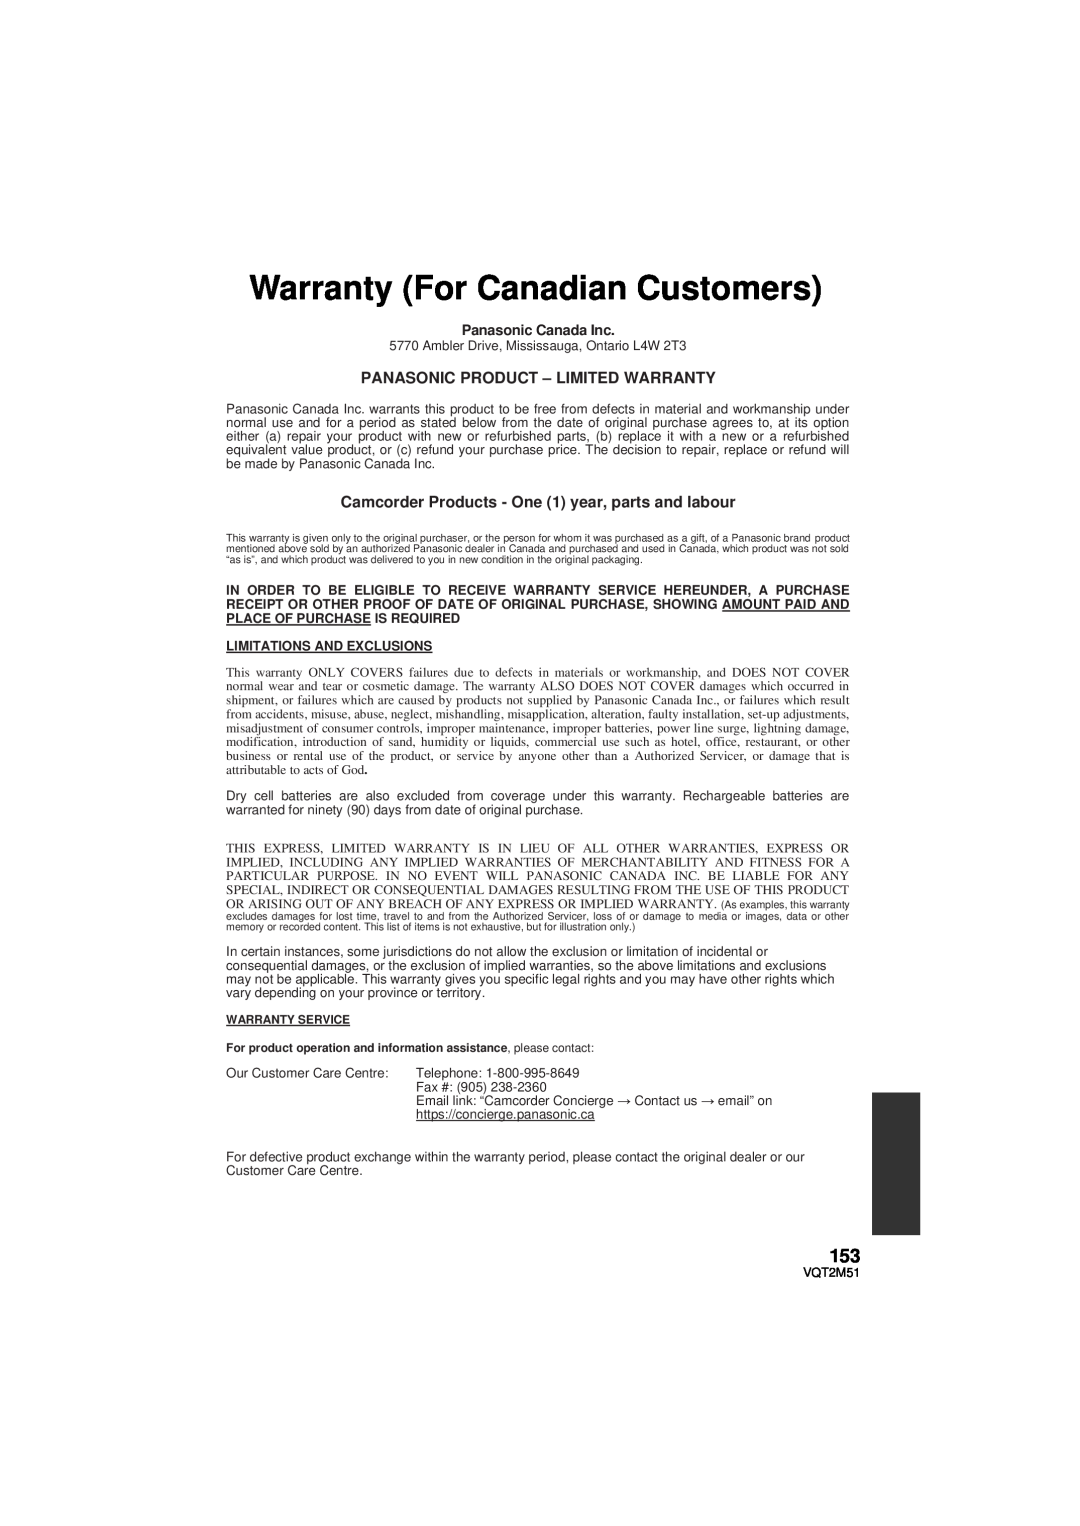 Panasonic HDC-TM60P/PC Warranty For Canadian Customers, Panasonic Product - Limited Warranty, Panasonic Canada Inc 